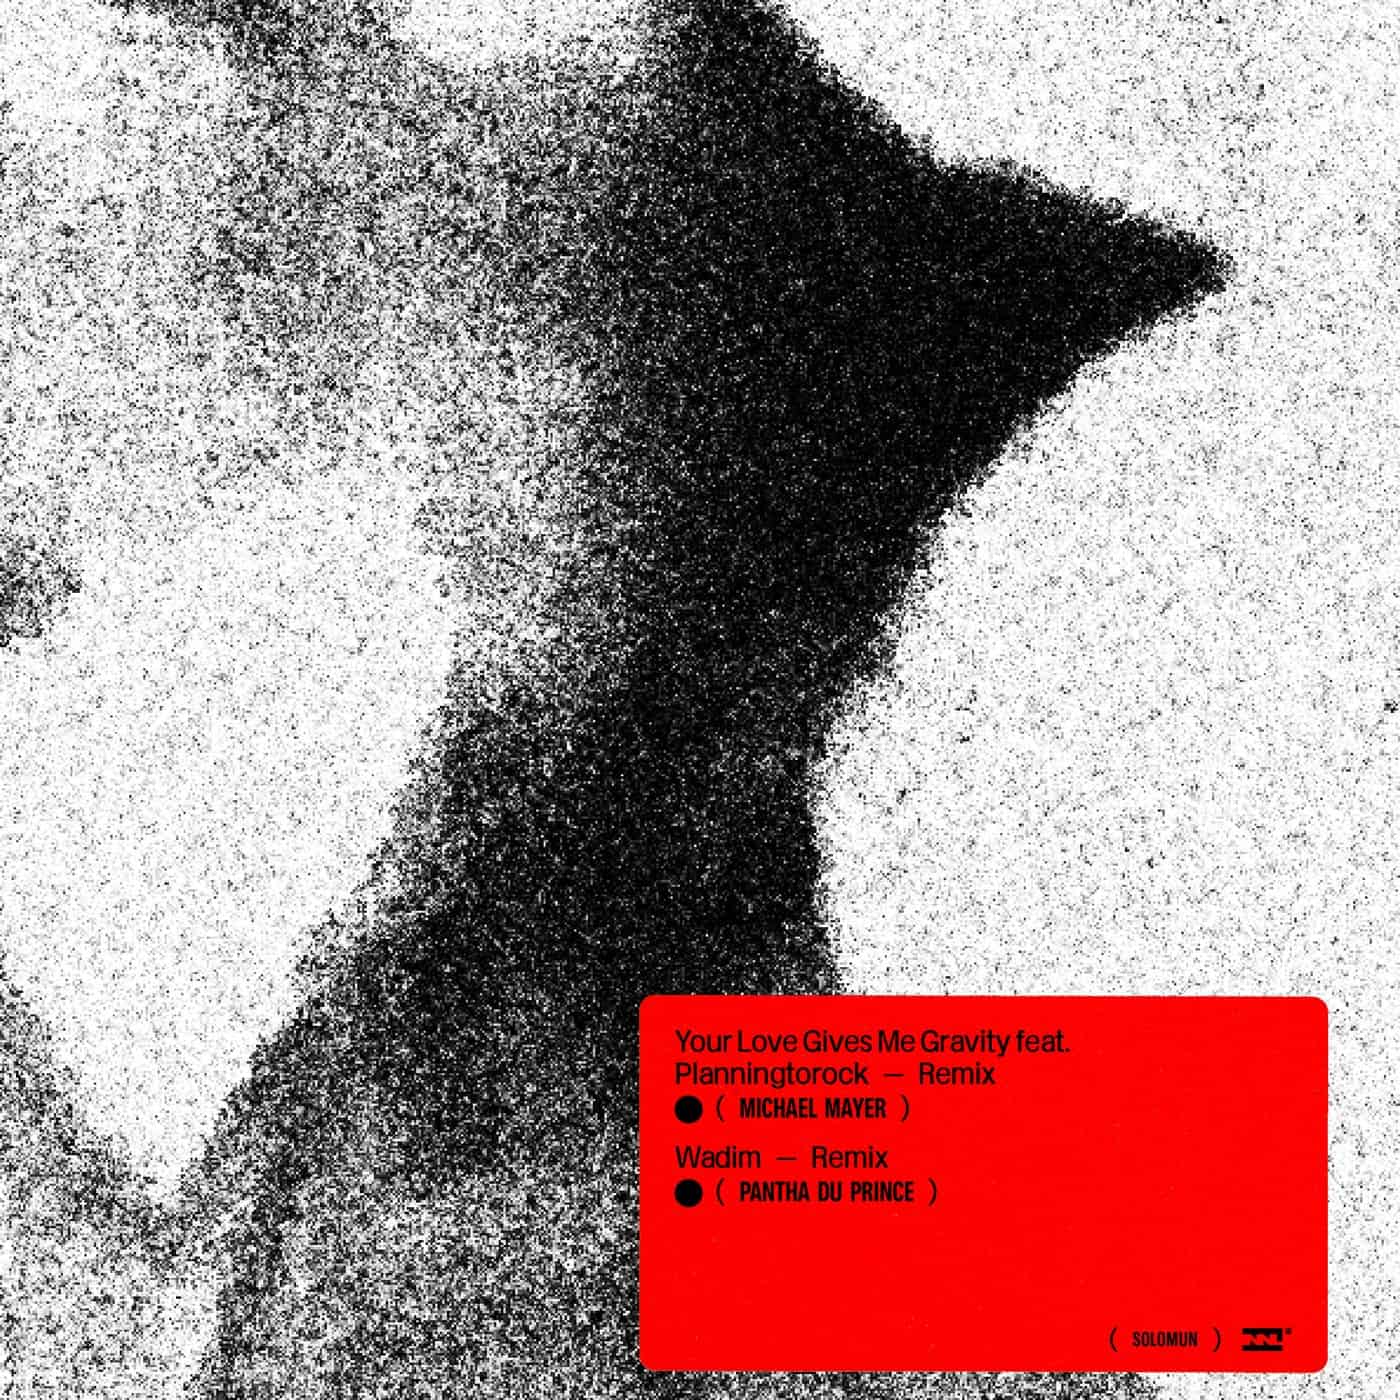 image cover: Planningtorock, Solomun, Jam Rostron - Nobody Is Not Loved, Remixes, Pt. 6 / 4050538855081